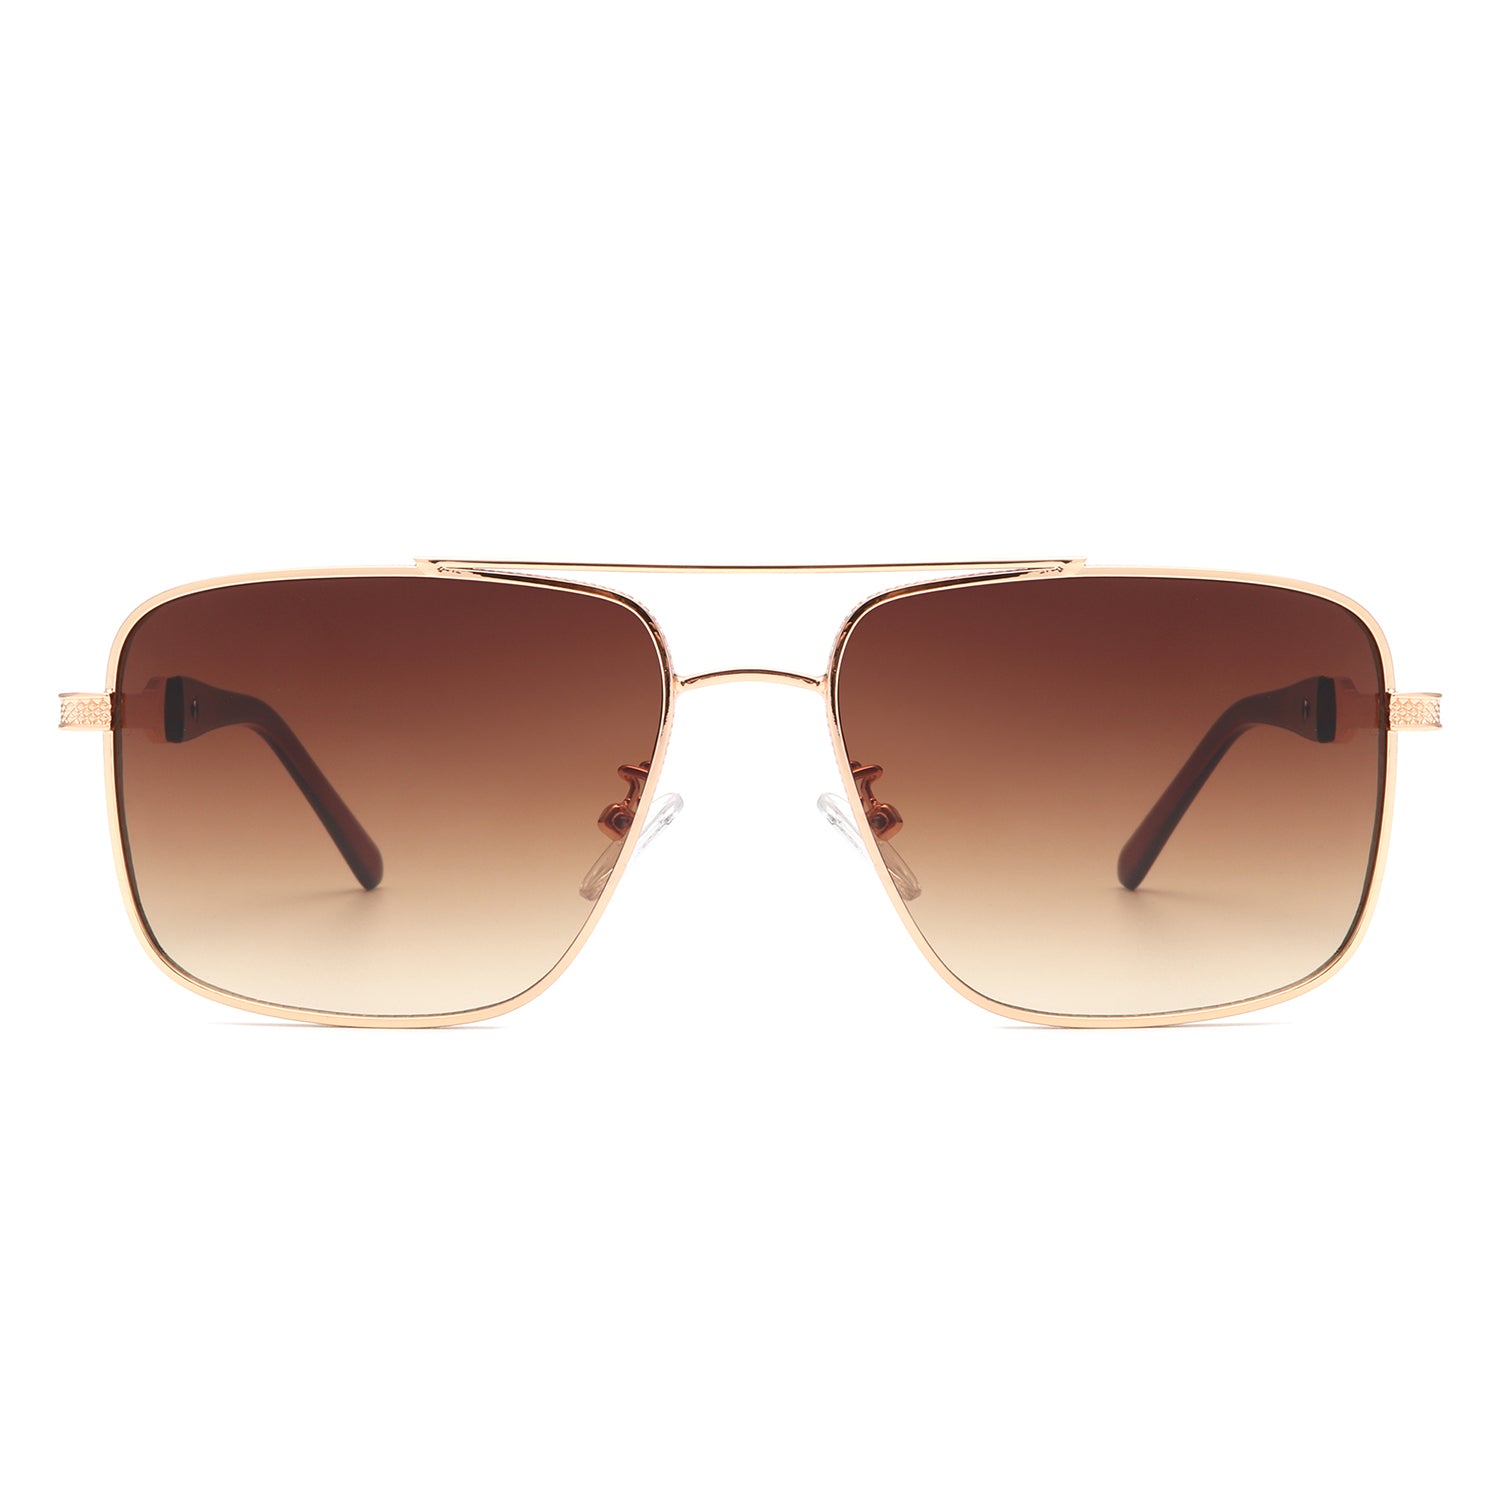 J2037 - Square Flat Top Tinted Brow-Bar Fashion Wholesale Sunglasses